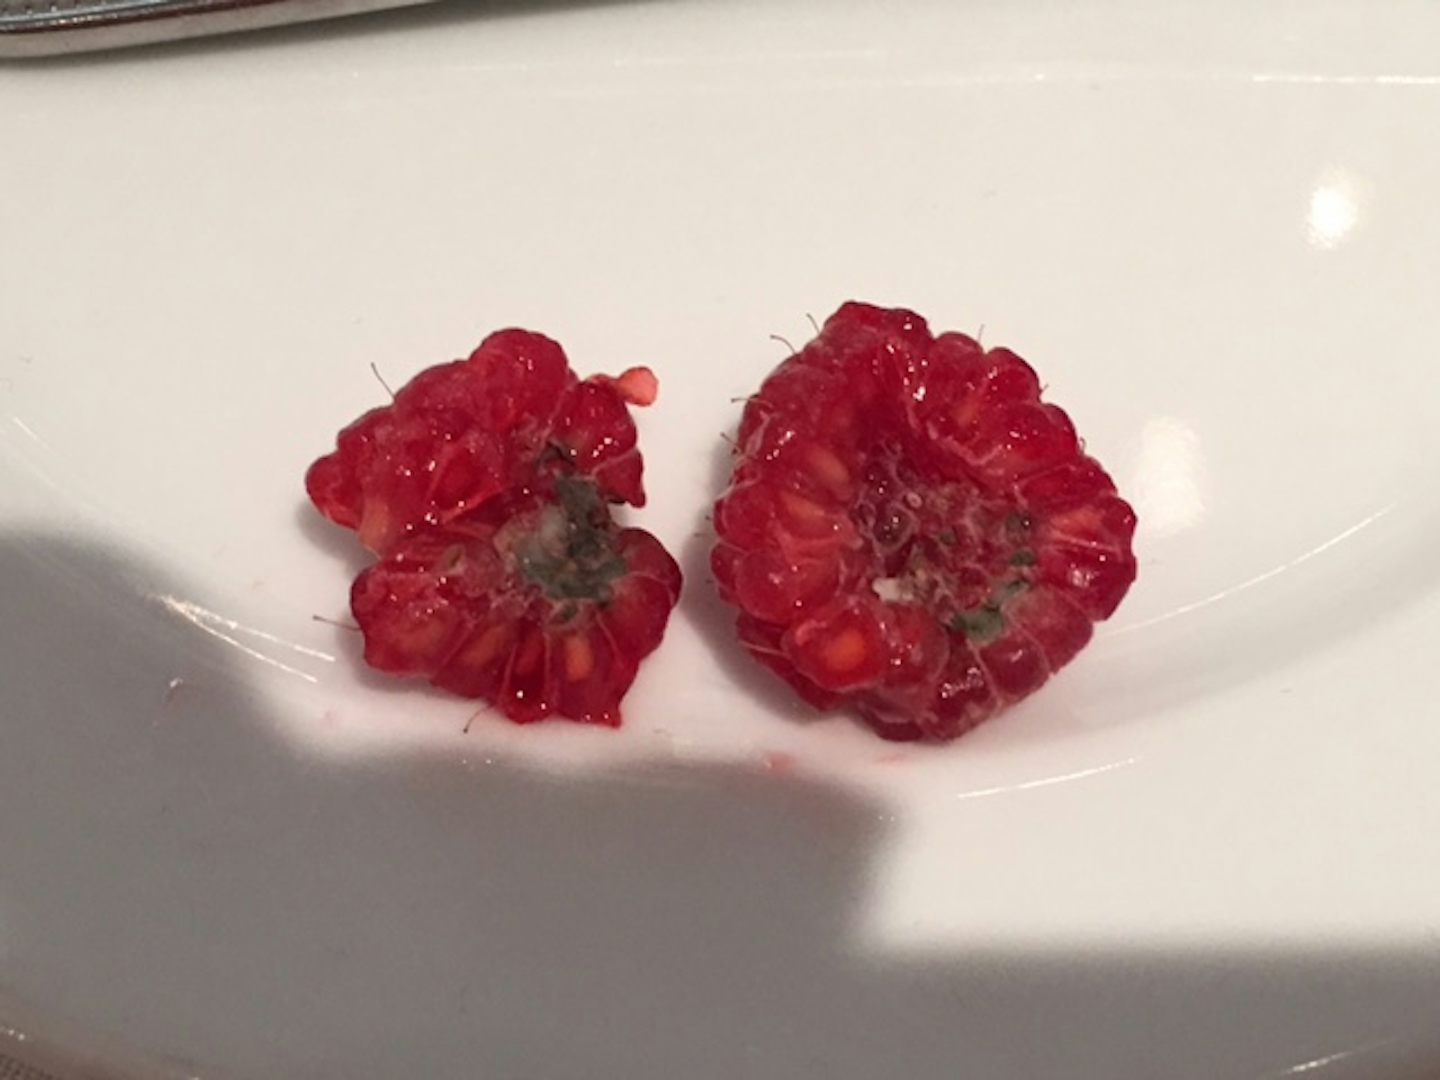 molded berries